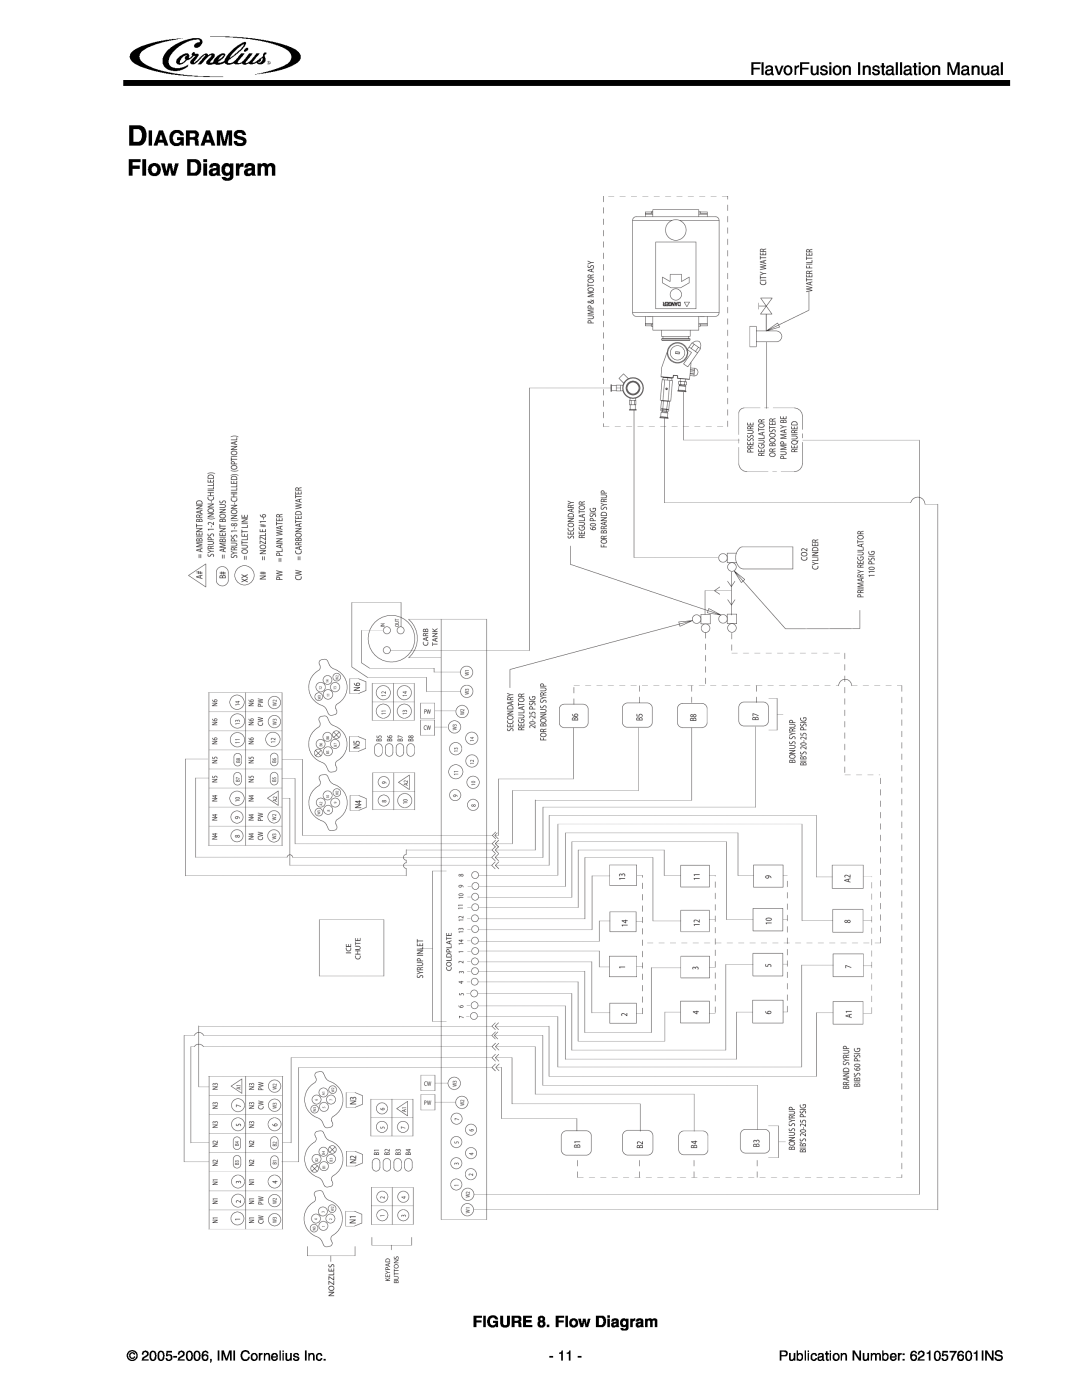 Cornelius FlavorFusion Series installation manual Flow Diagram, Diagrams, Publication 